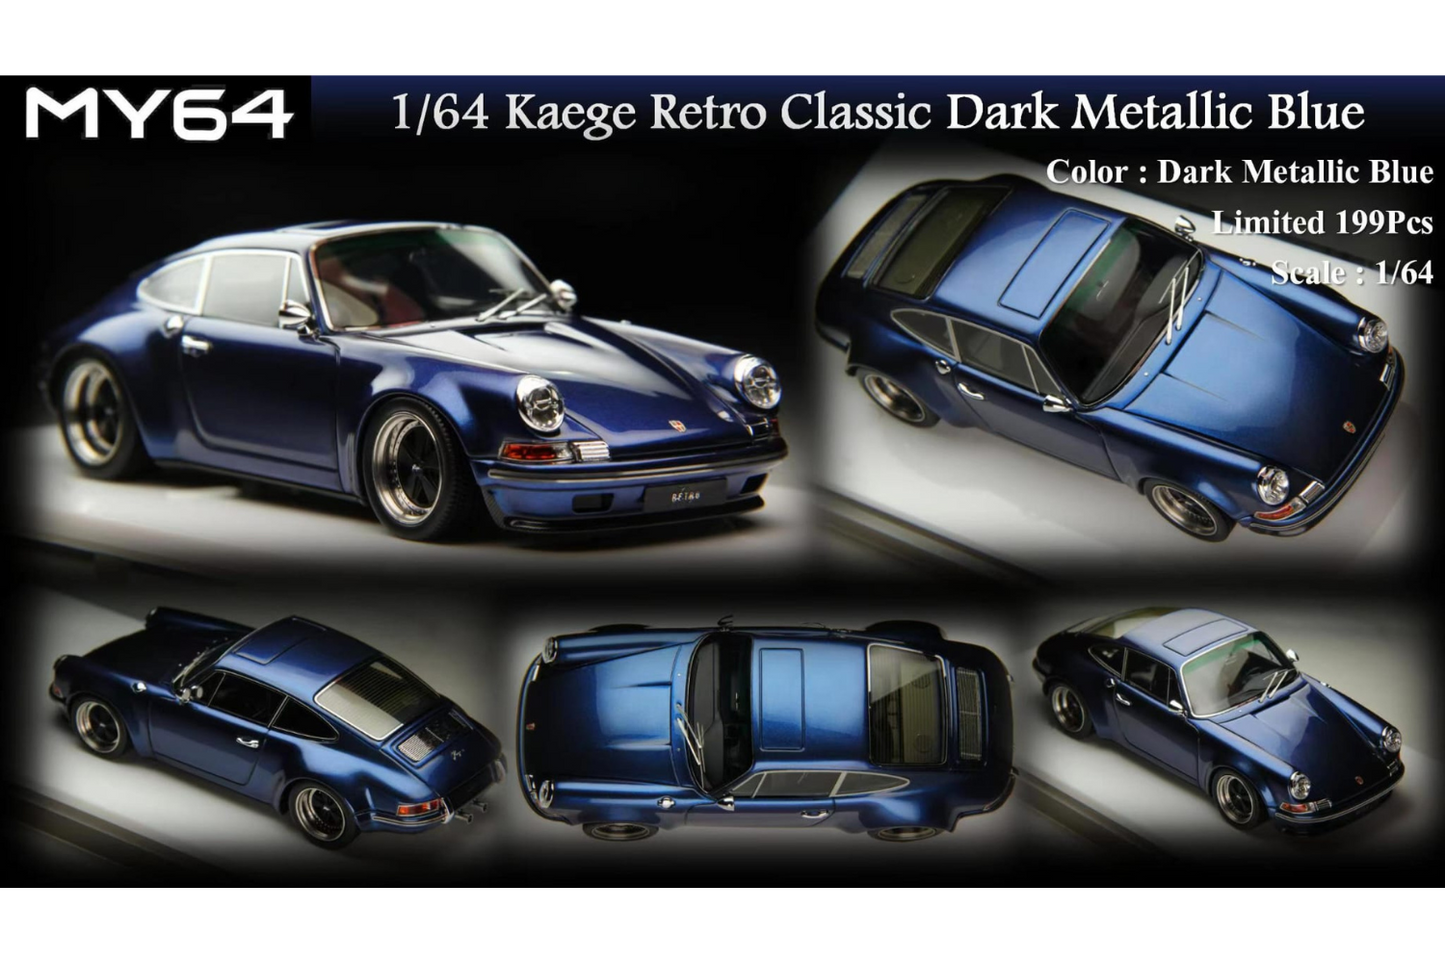 MY64 1/64 Kaege Retro Classic in Dark Metallic Blue